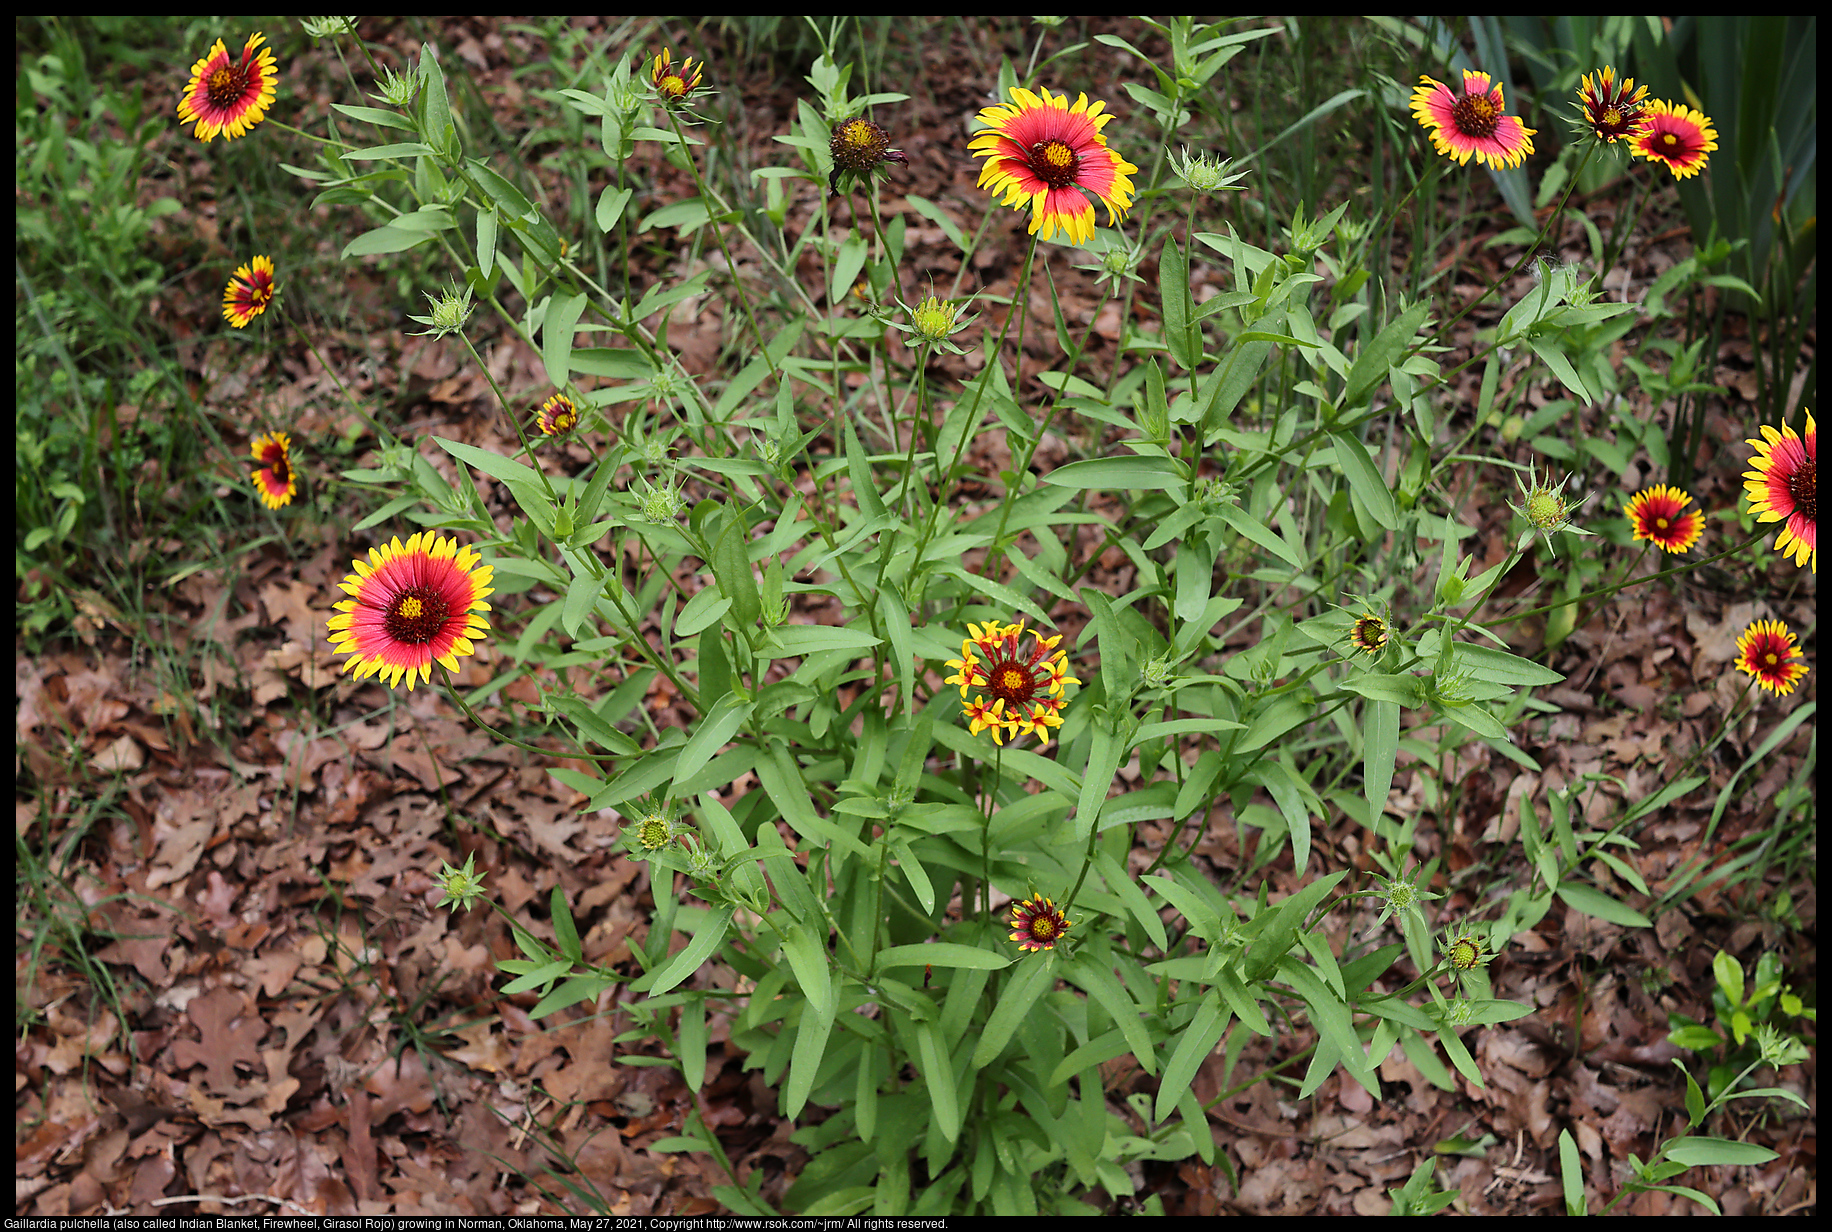 Gaillardia pulchella (also called Indian Blanket, Firewheel, Girasol Rojo) growing in Norman, Oklahoma, May 27, 2021